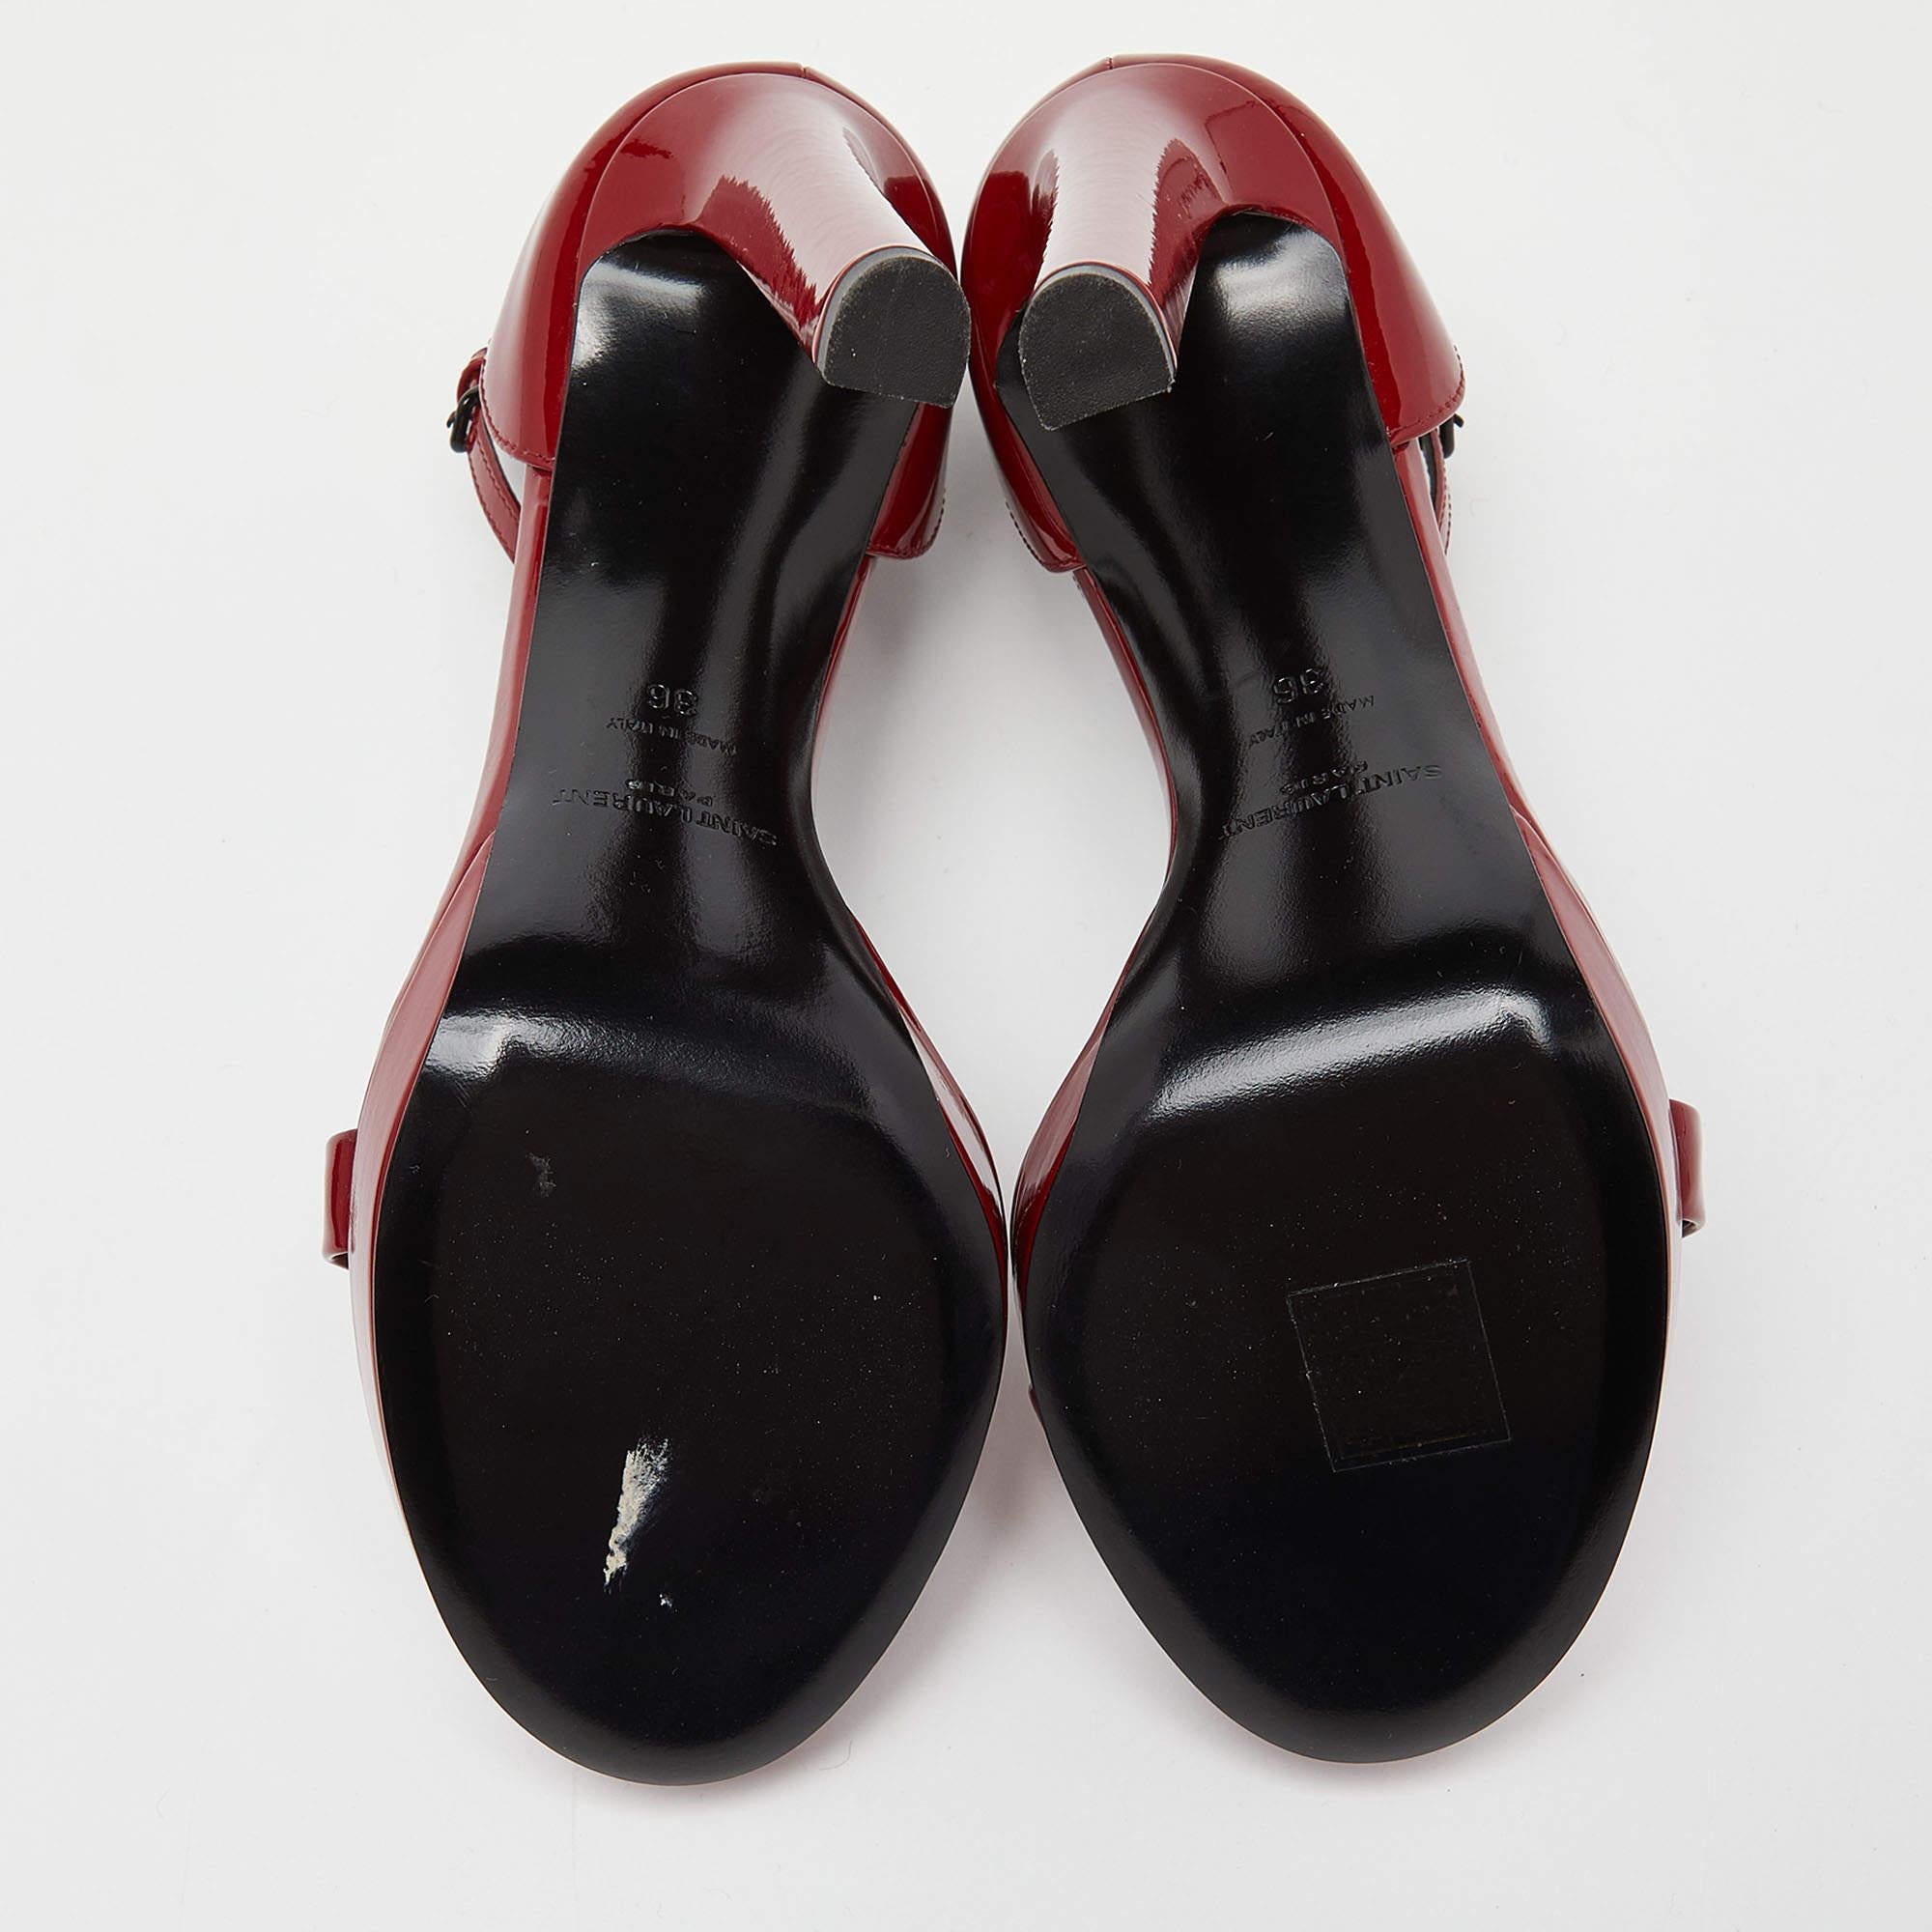 Saint Laurent Red Patent Leather Ankle Strap Sandals Size 36 3